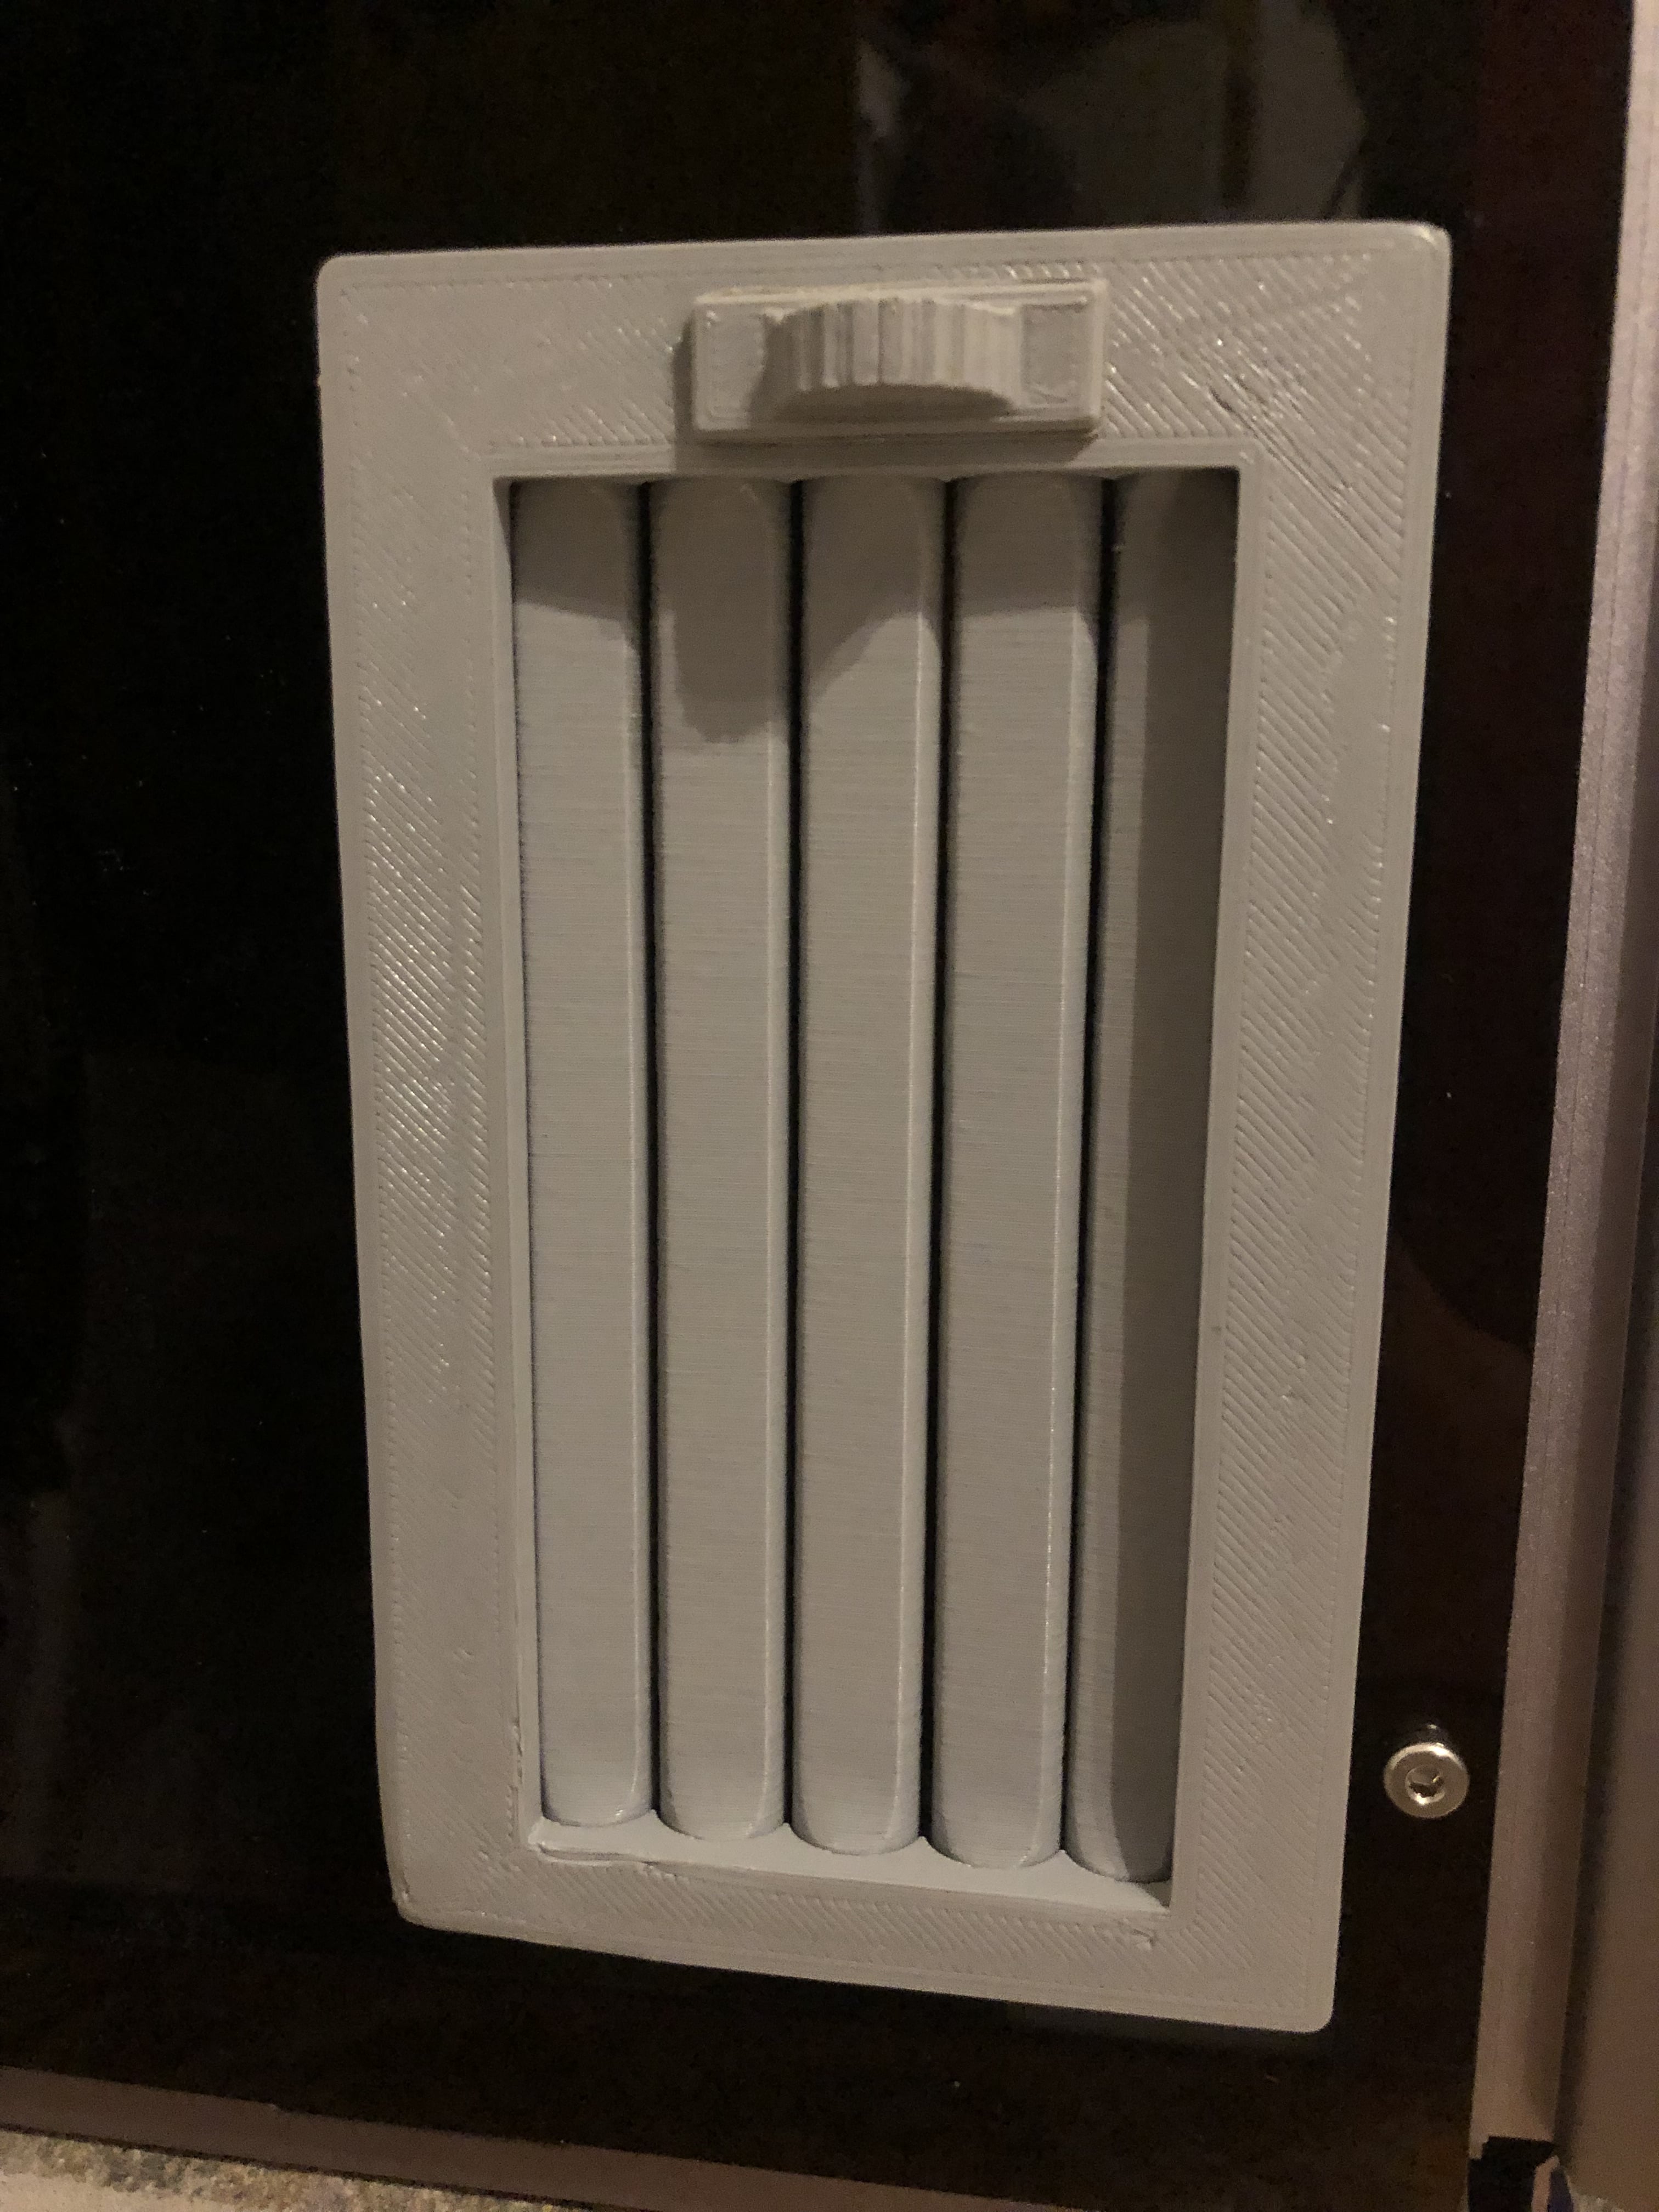 Snapmaker enclosure closable vent cover